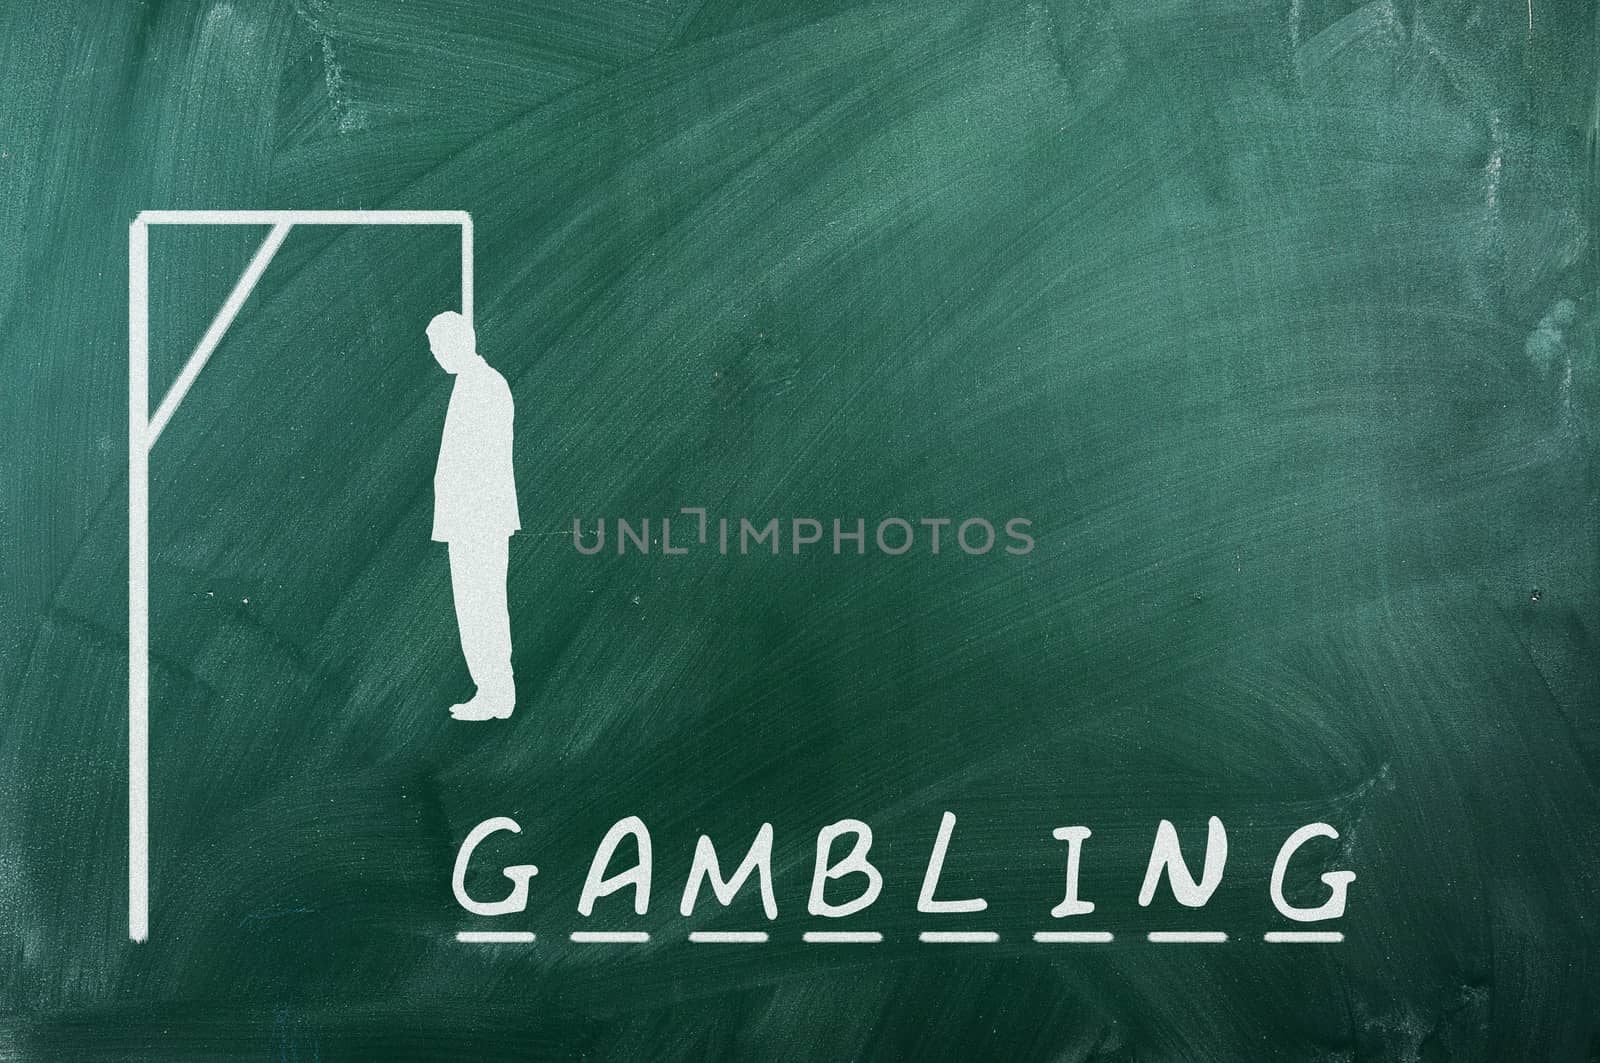 Hangman game on green chalkboard ,concept of gambling addiction